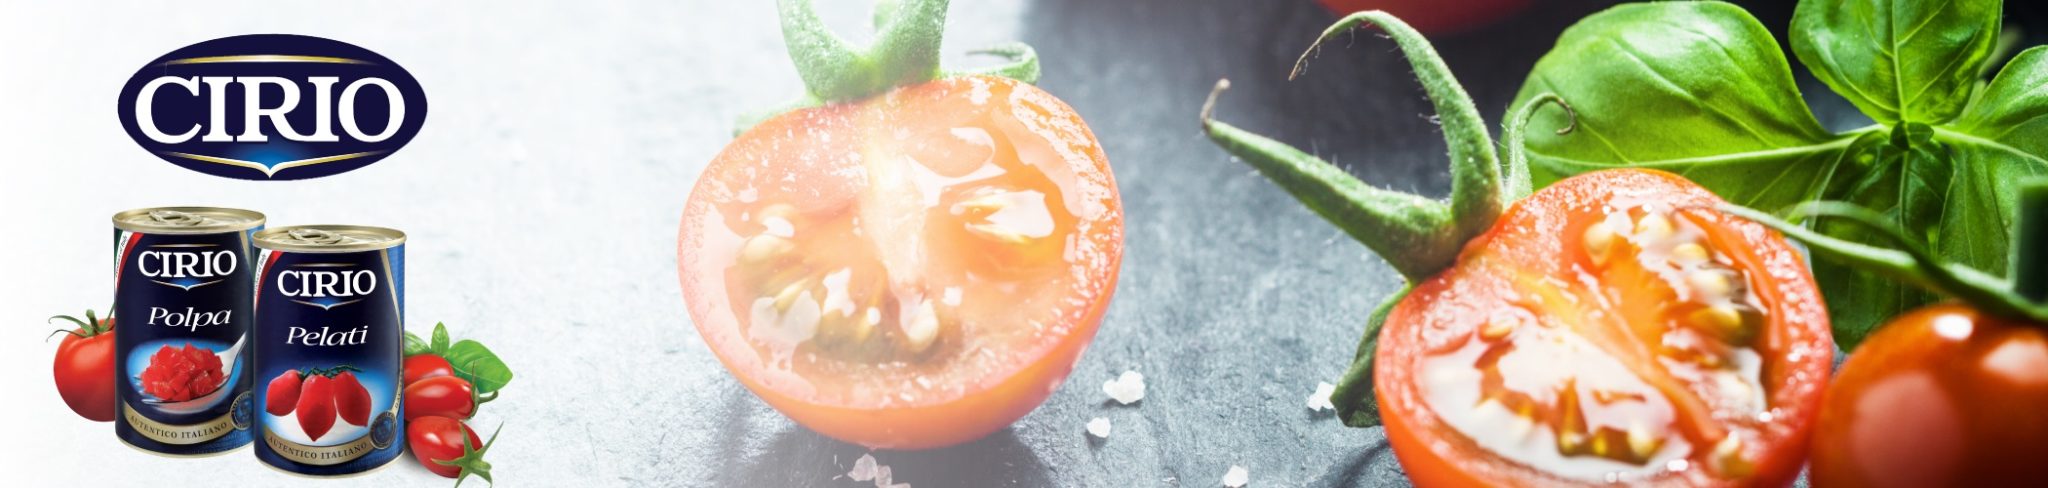 cirio malaysia canned tomatoes supplier